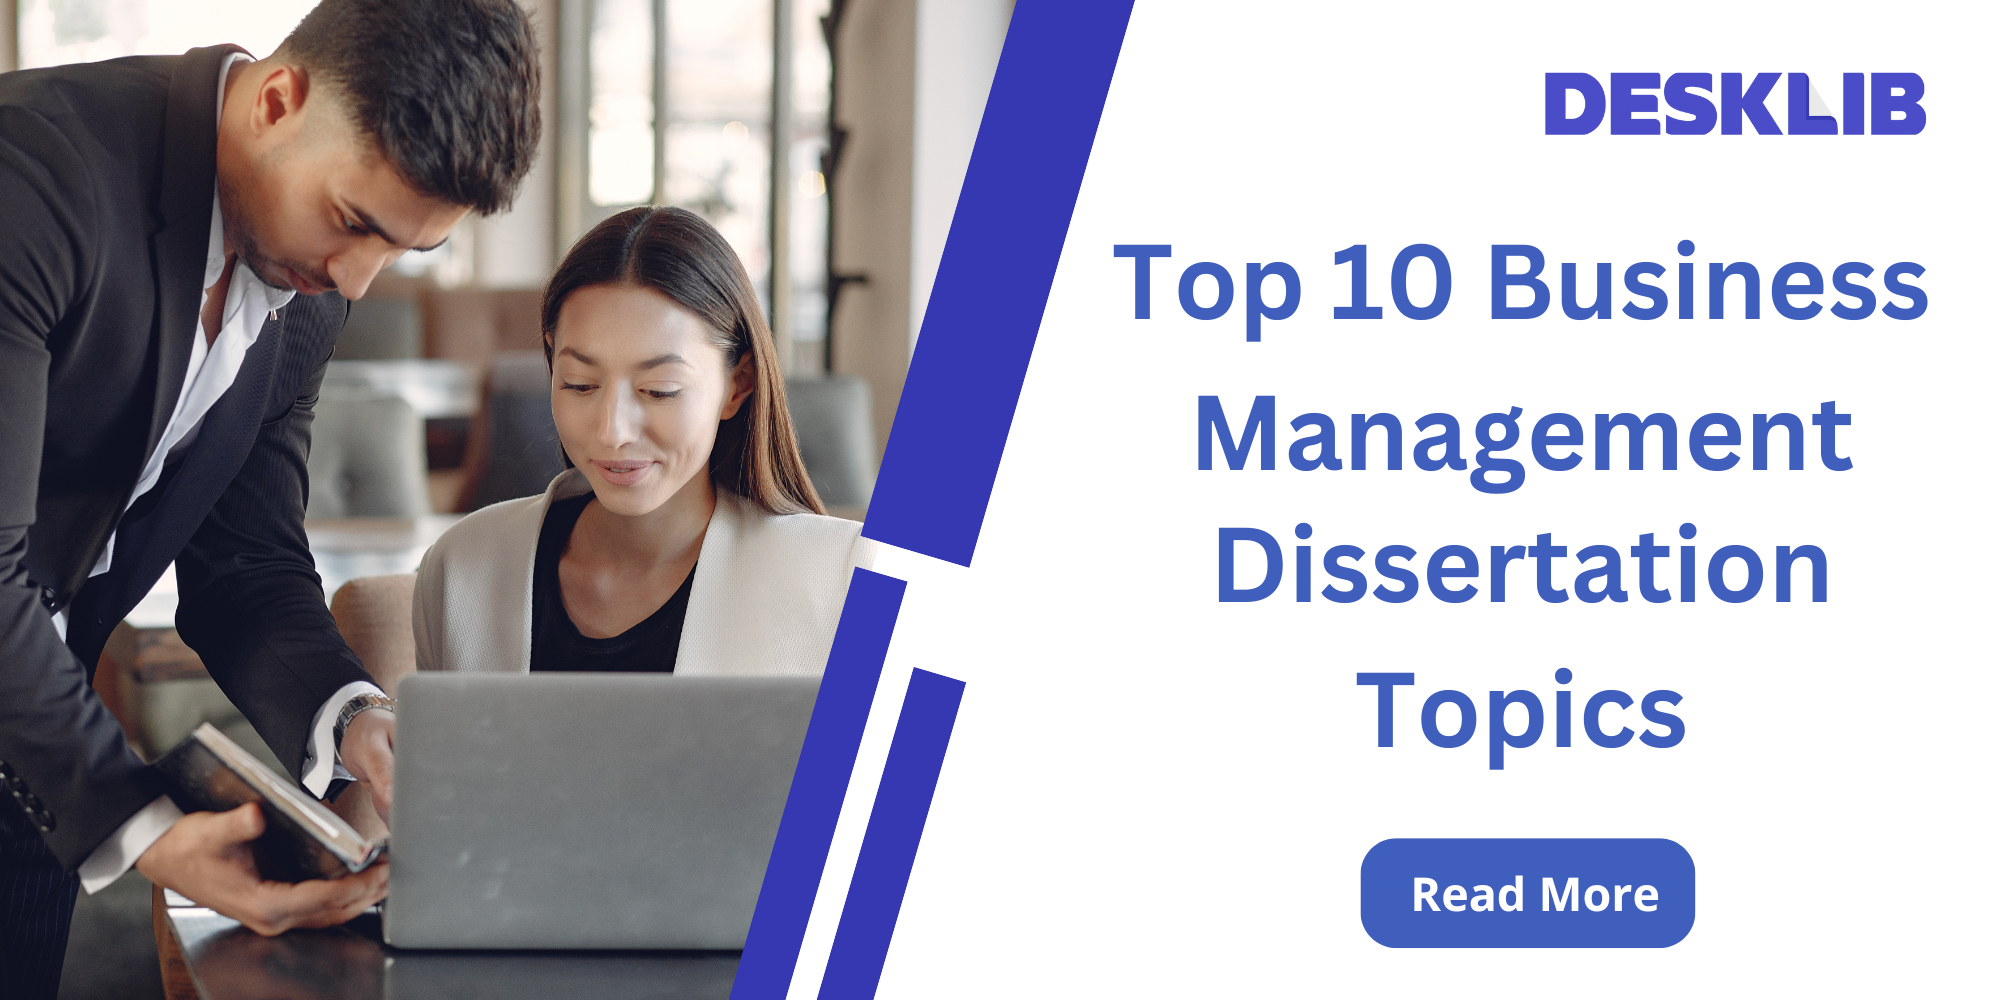 Top 10 Business Management Dissertation Topics